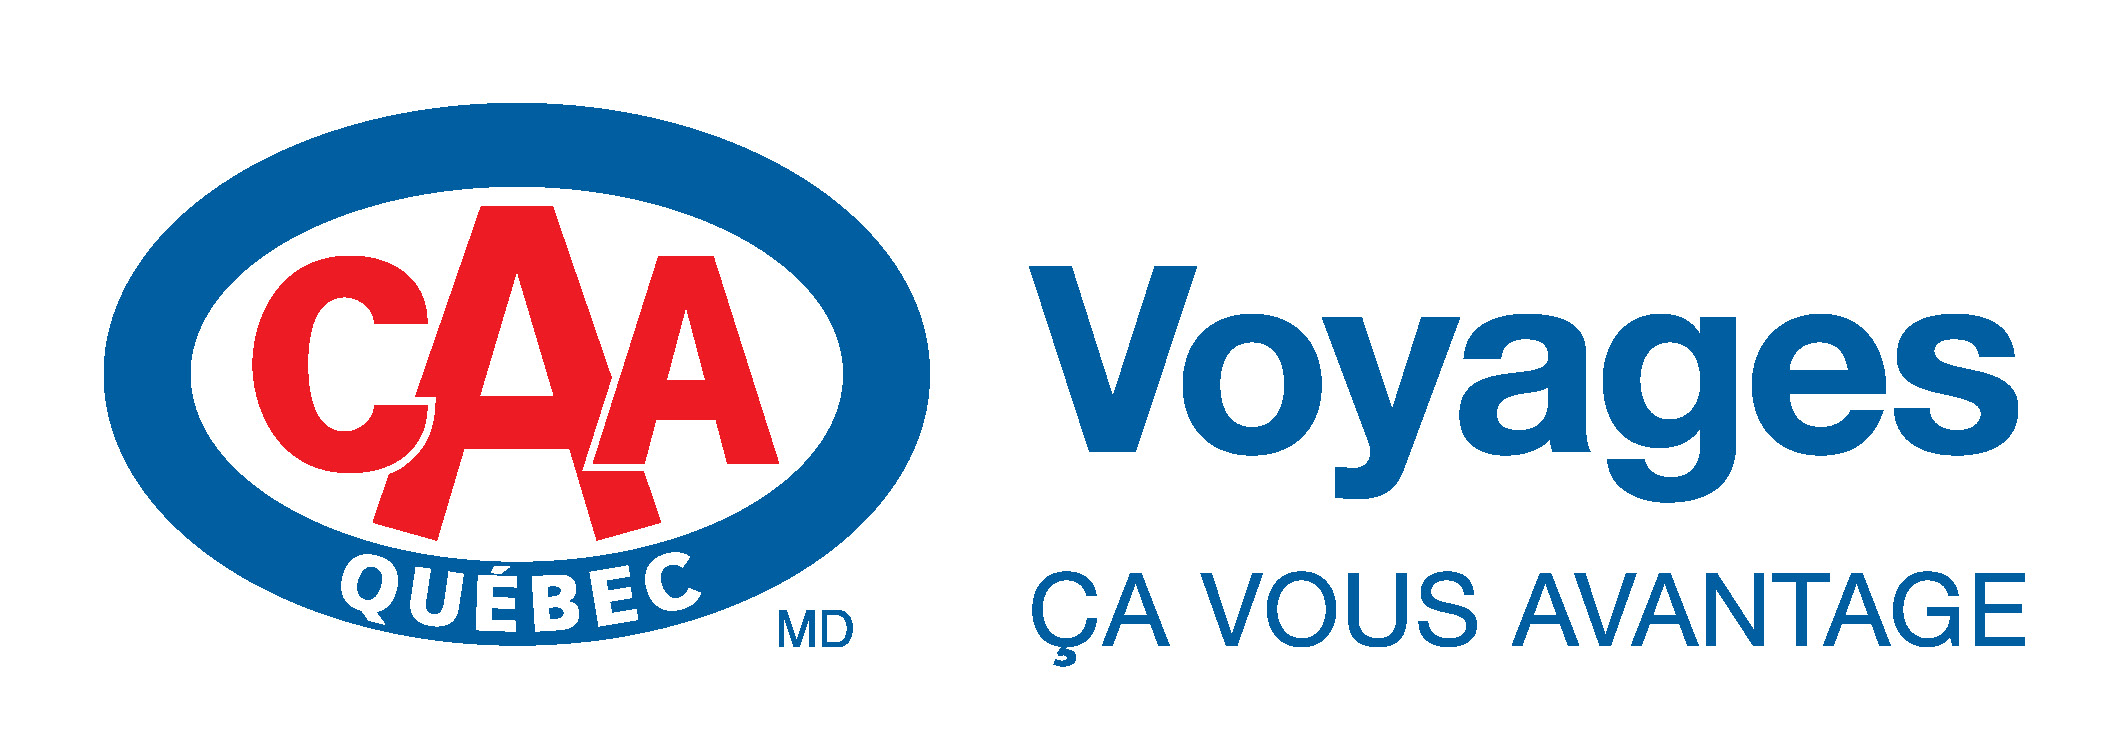 CAA-Voyages-HOR-CMYK